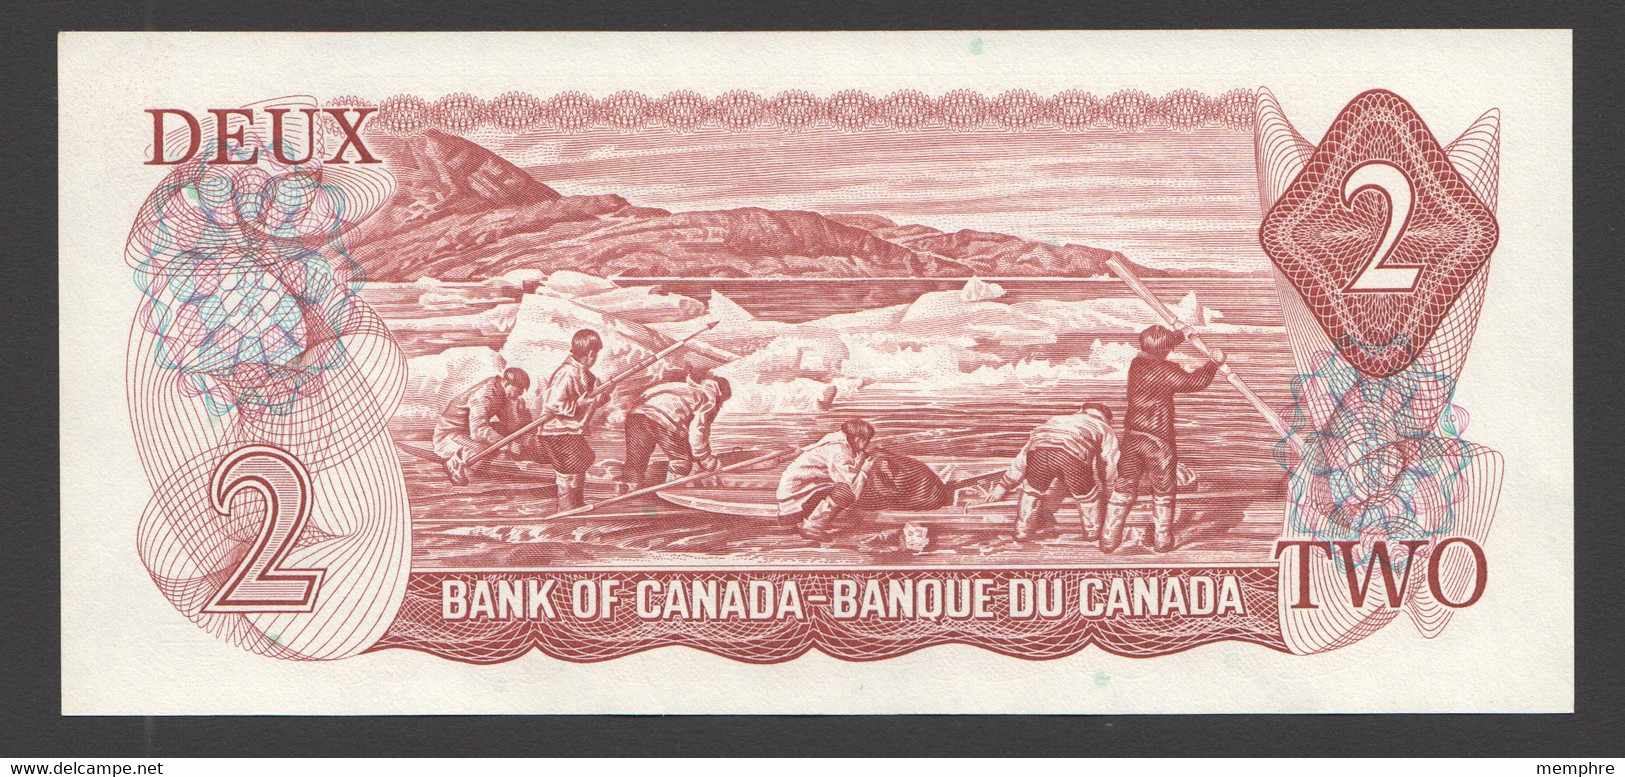 1973  $2   Signed   Lawson / Bouey  UNC - Kanada